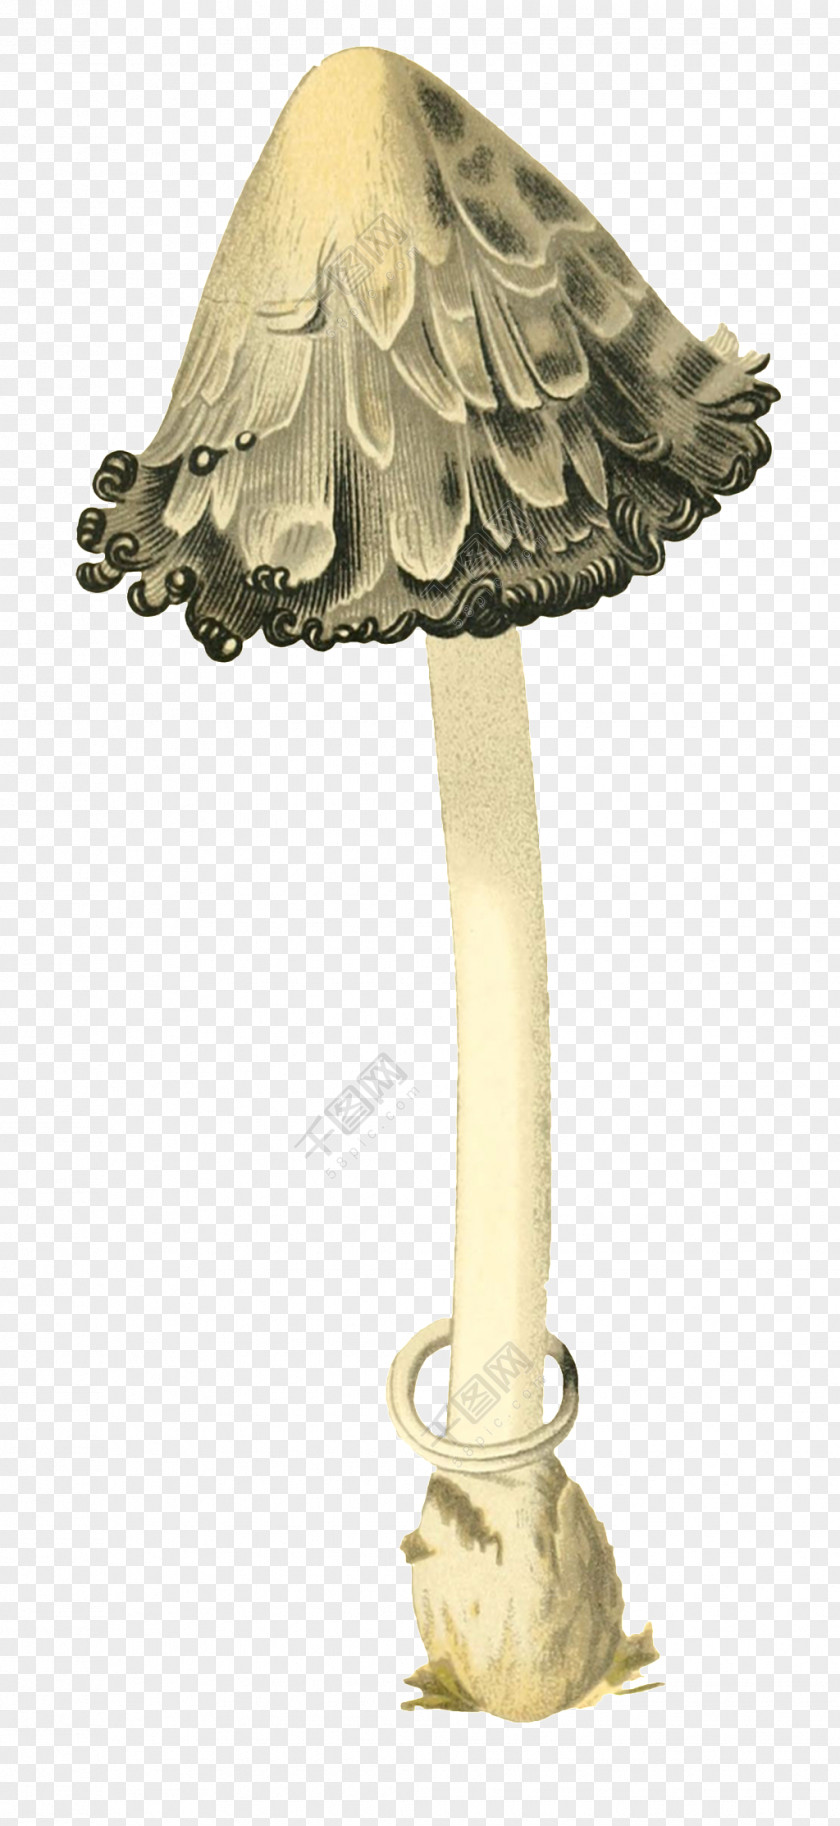 Wild Mushrooms Stock Photography Royalty-free Mushroom Image PNG